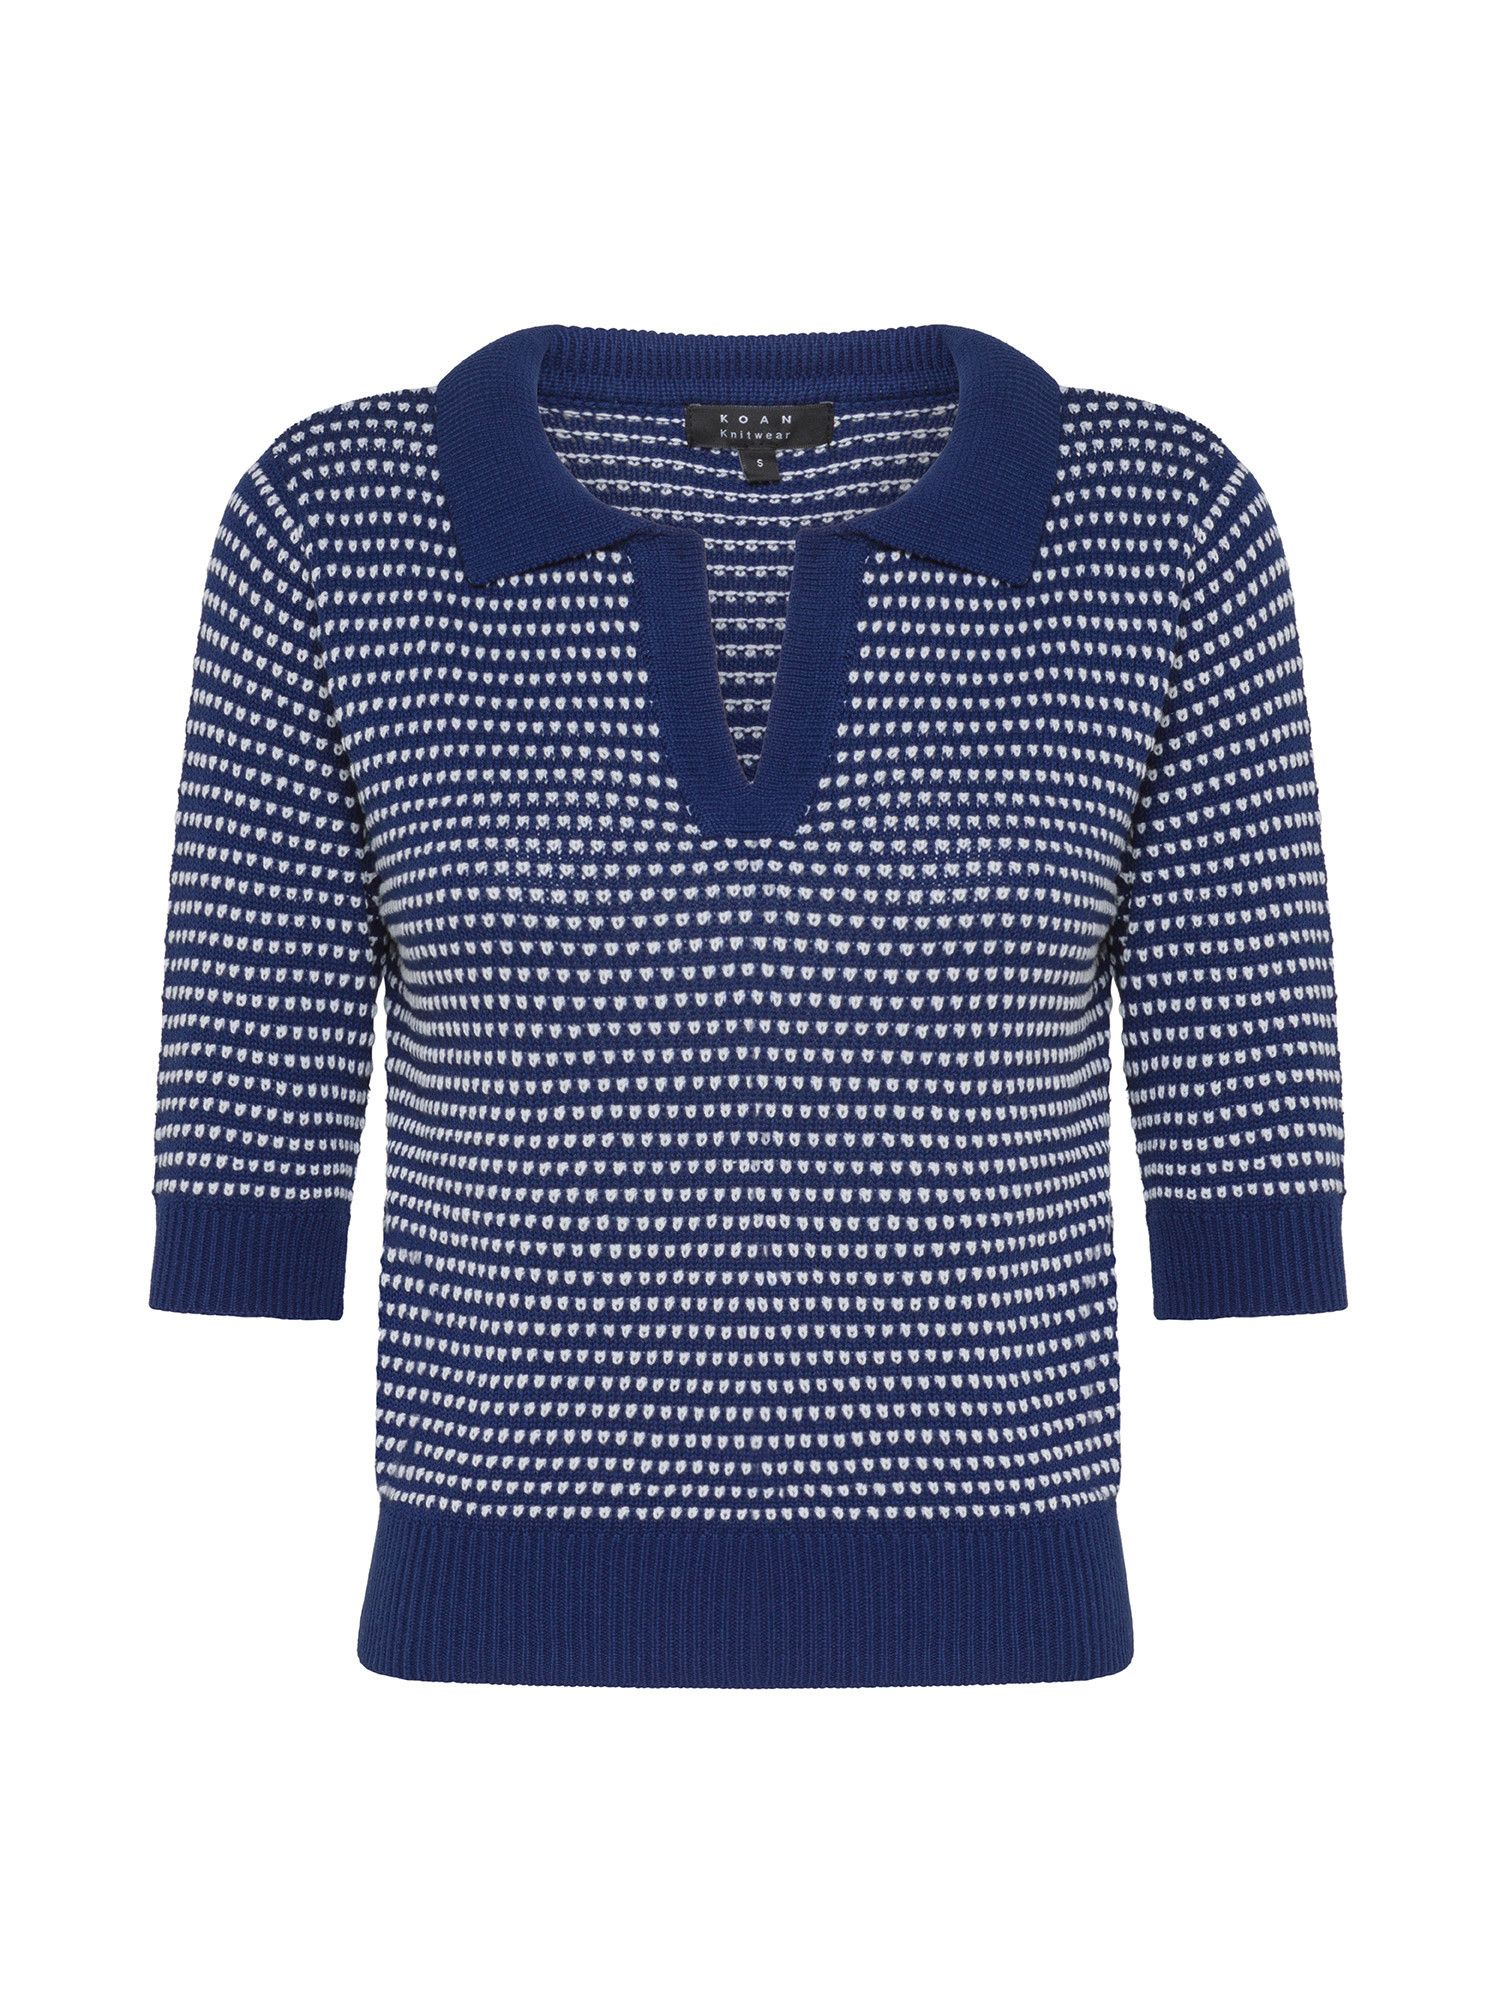 Koan - Short two-tone sweater, Dark Blue, large image number 0